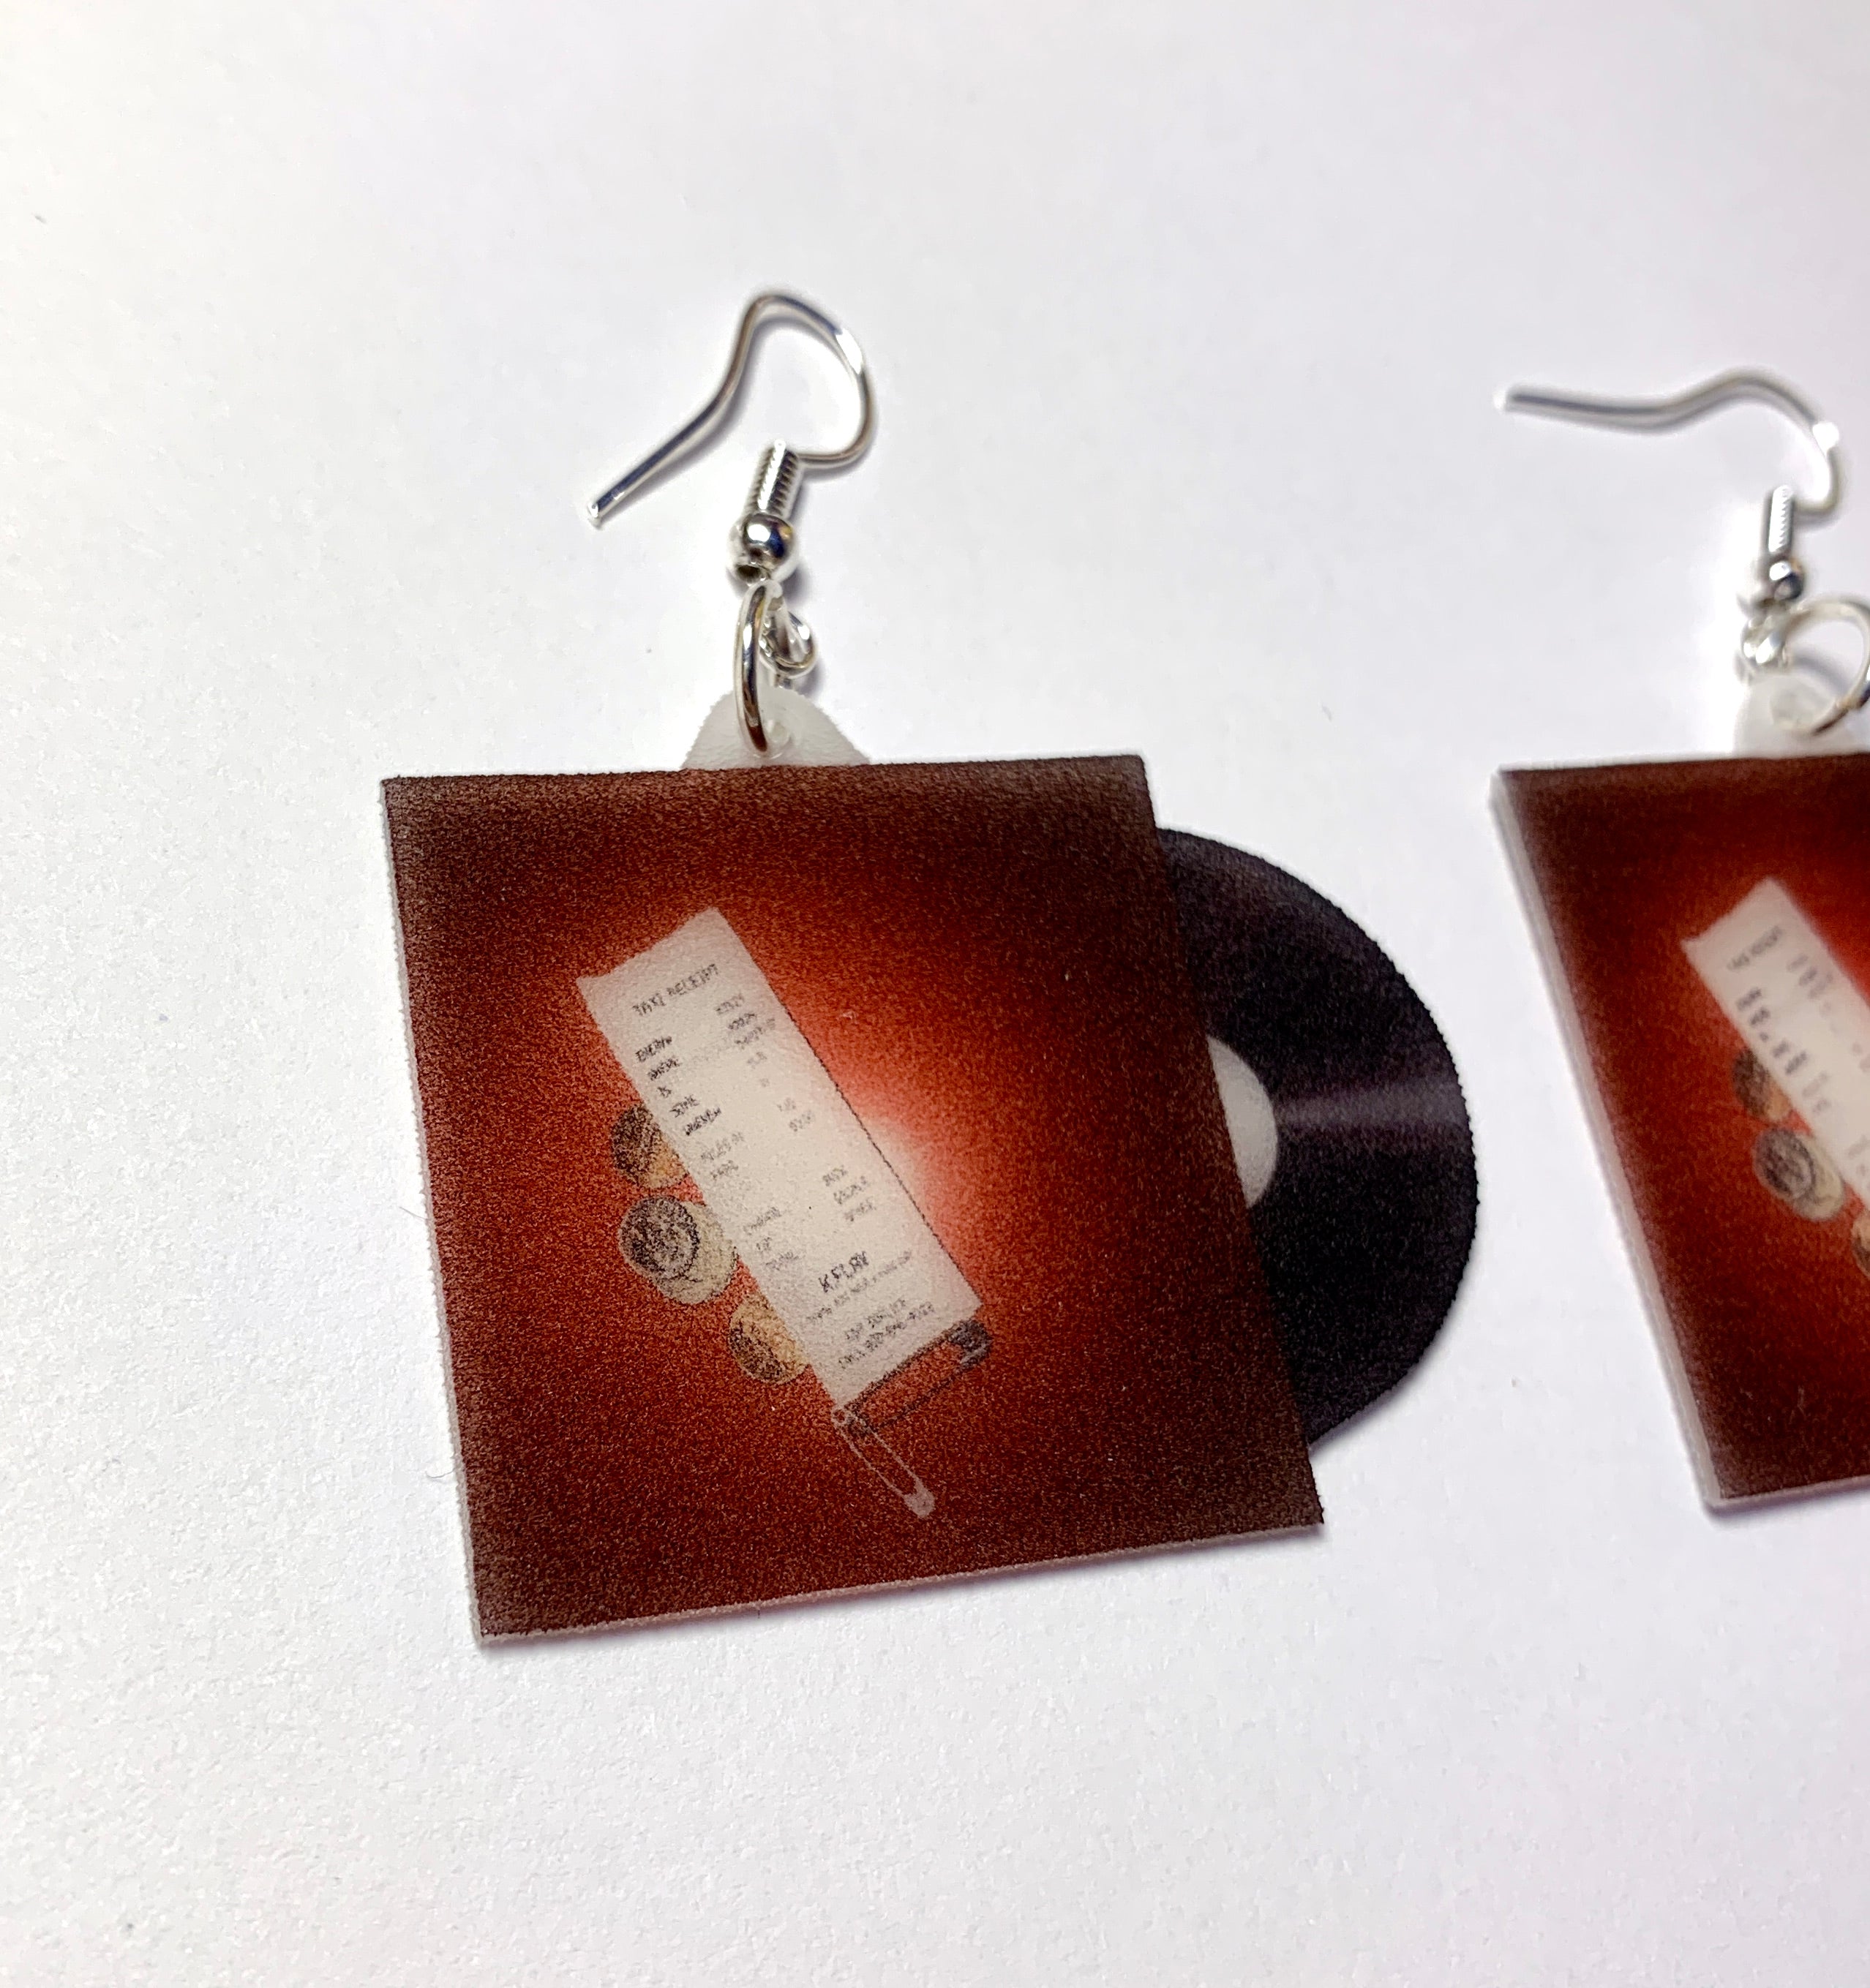 K. Flay Every Where is Some Where Vinyl Album Handmade Earrings!